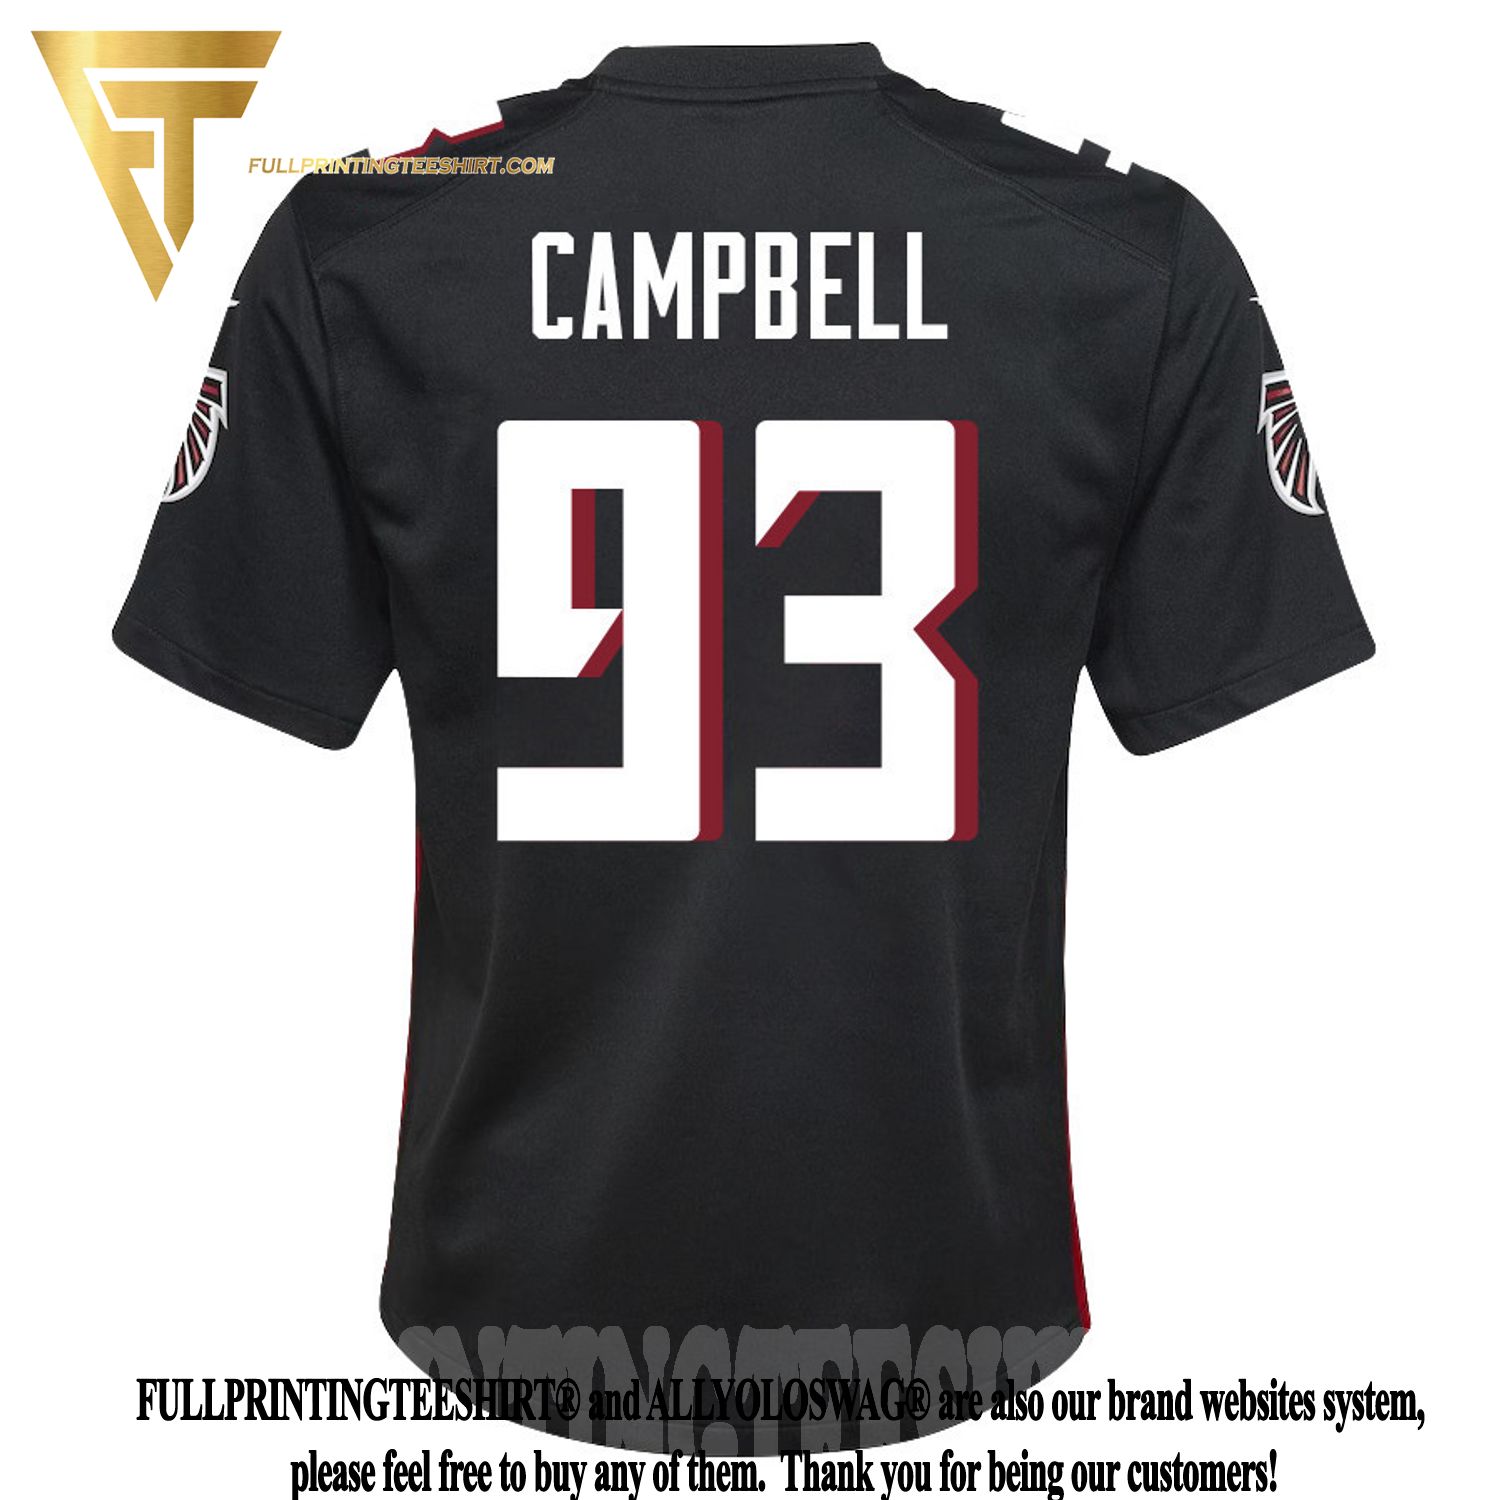 Top-selling Item] Calais Campbell 93 Atlanta Falcons Youth Game 3D